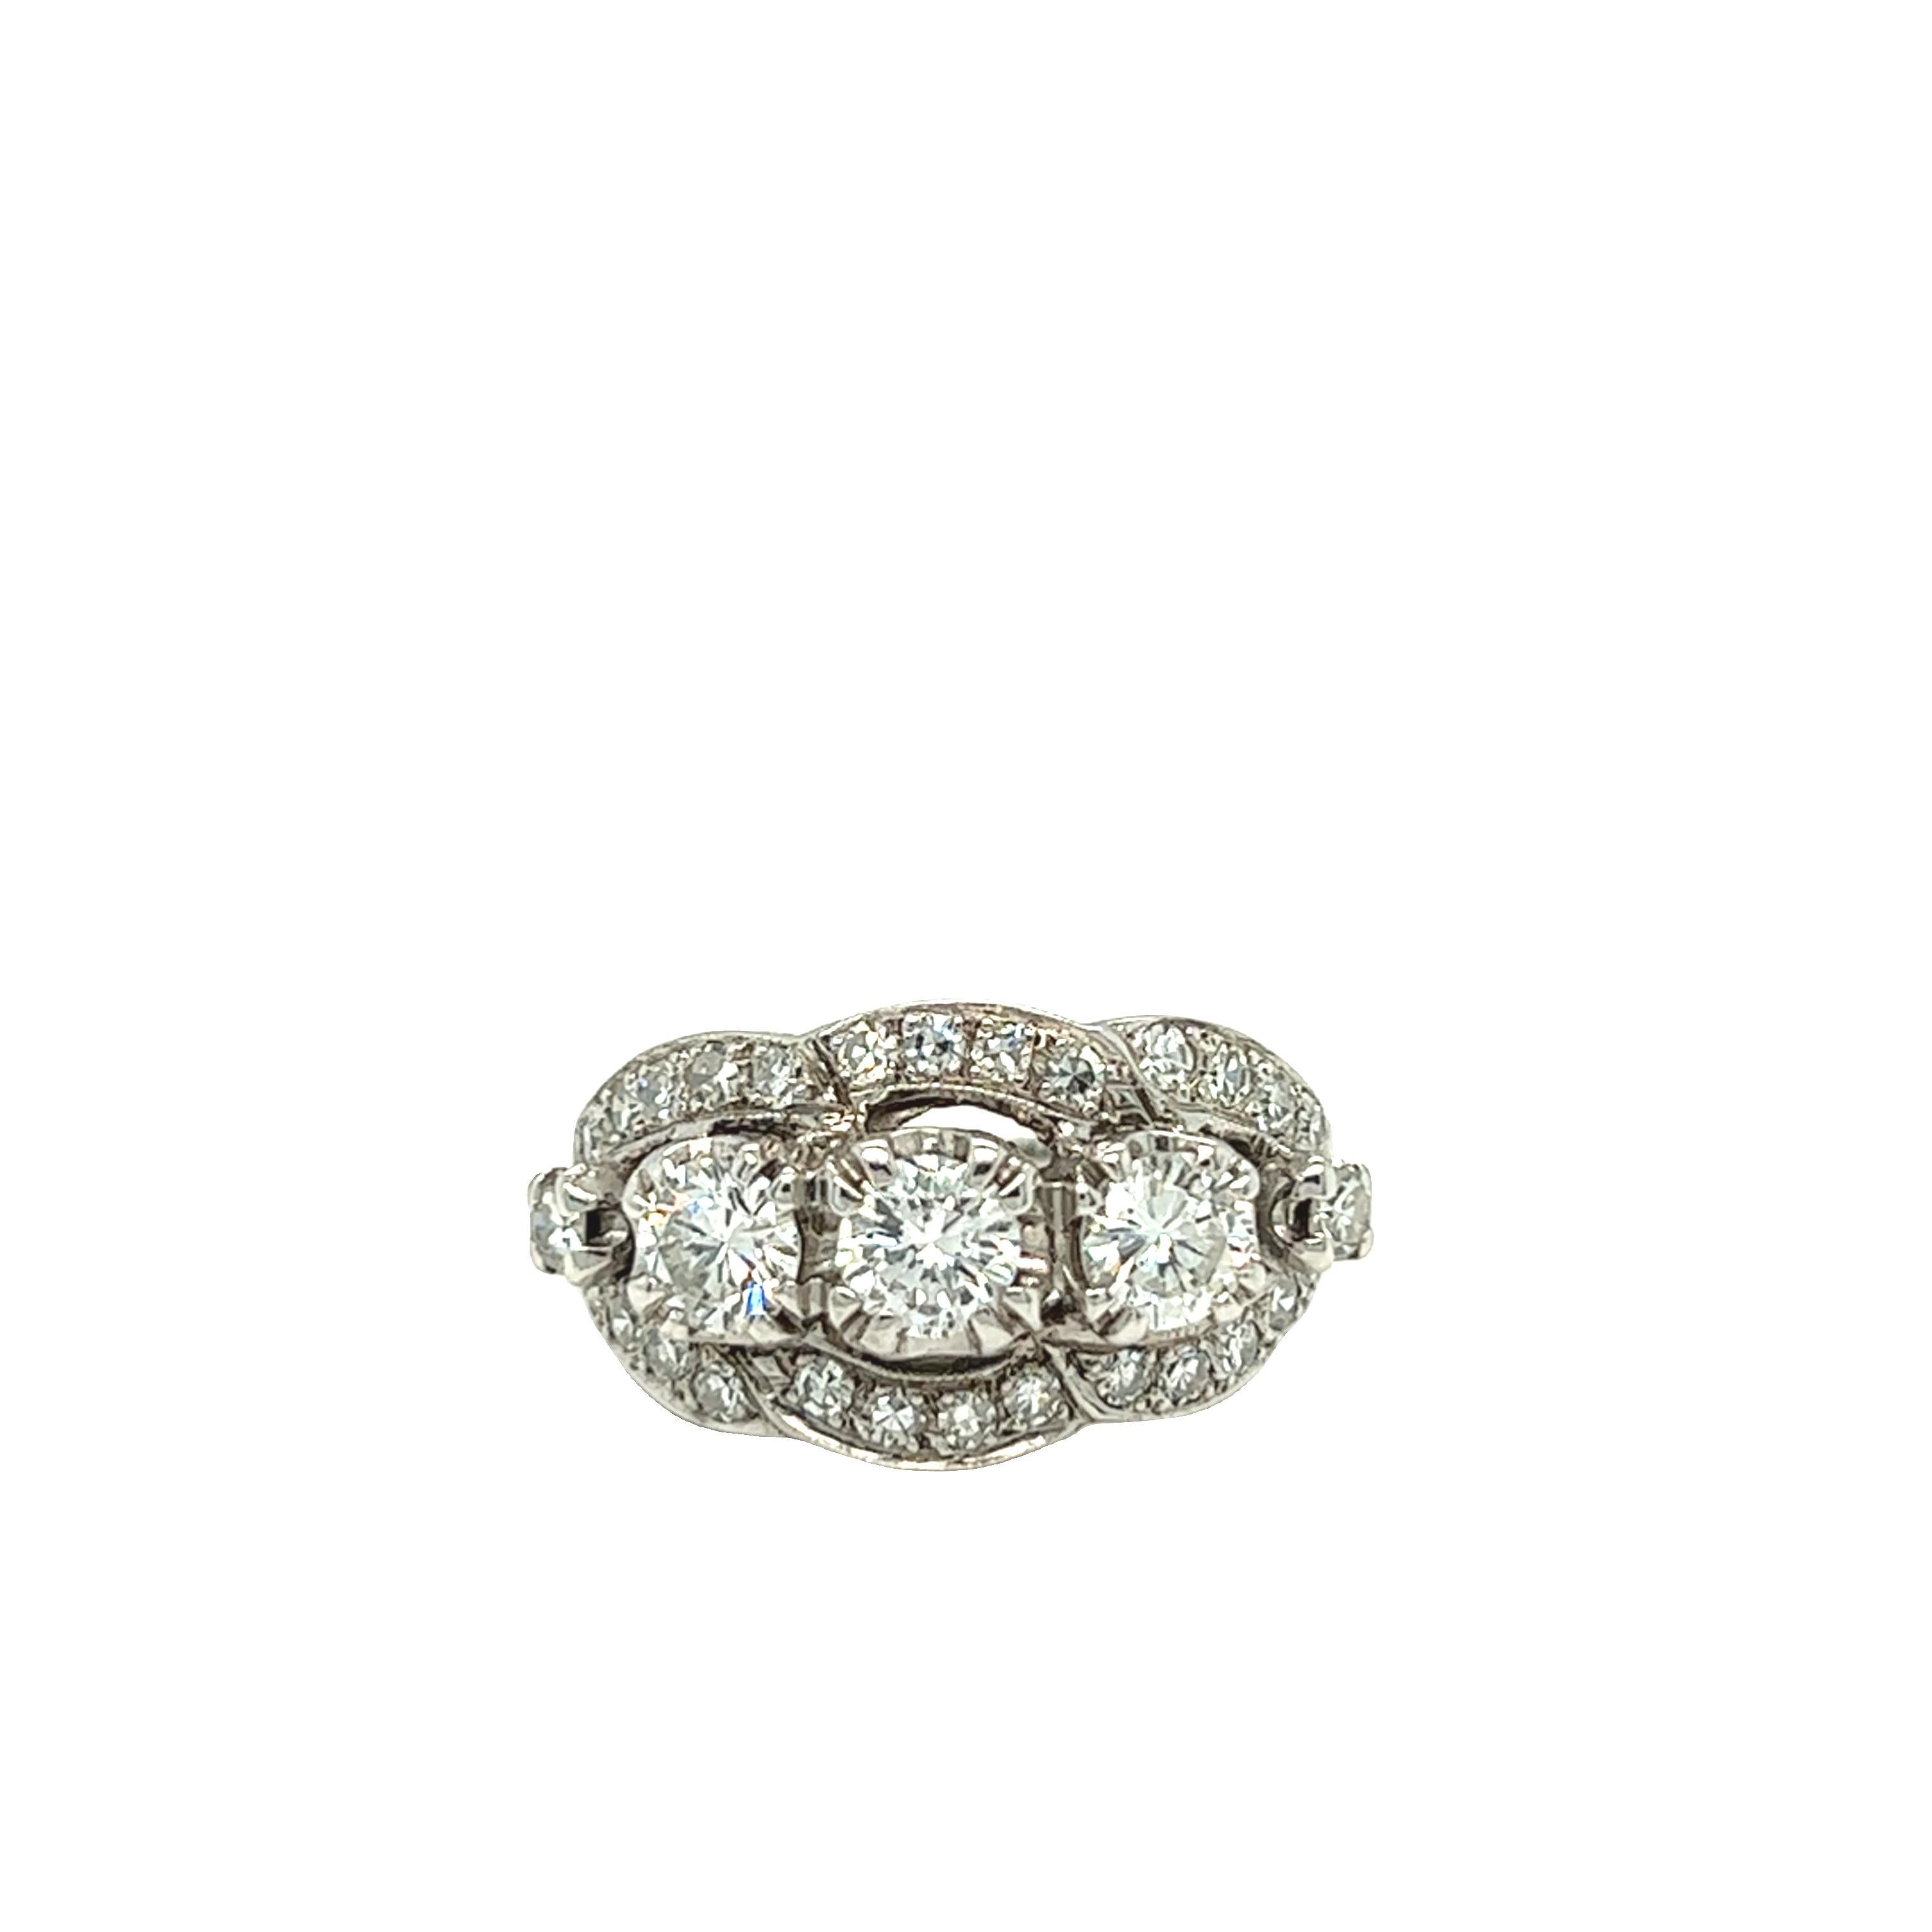 Women's 1.78 Cttw Vintage Three Stone Diamond Ring in 14K White Gold For Sale